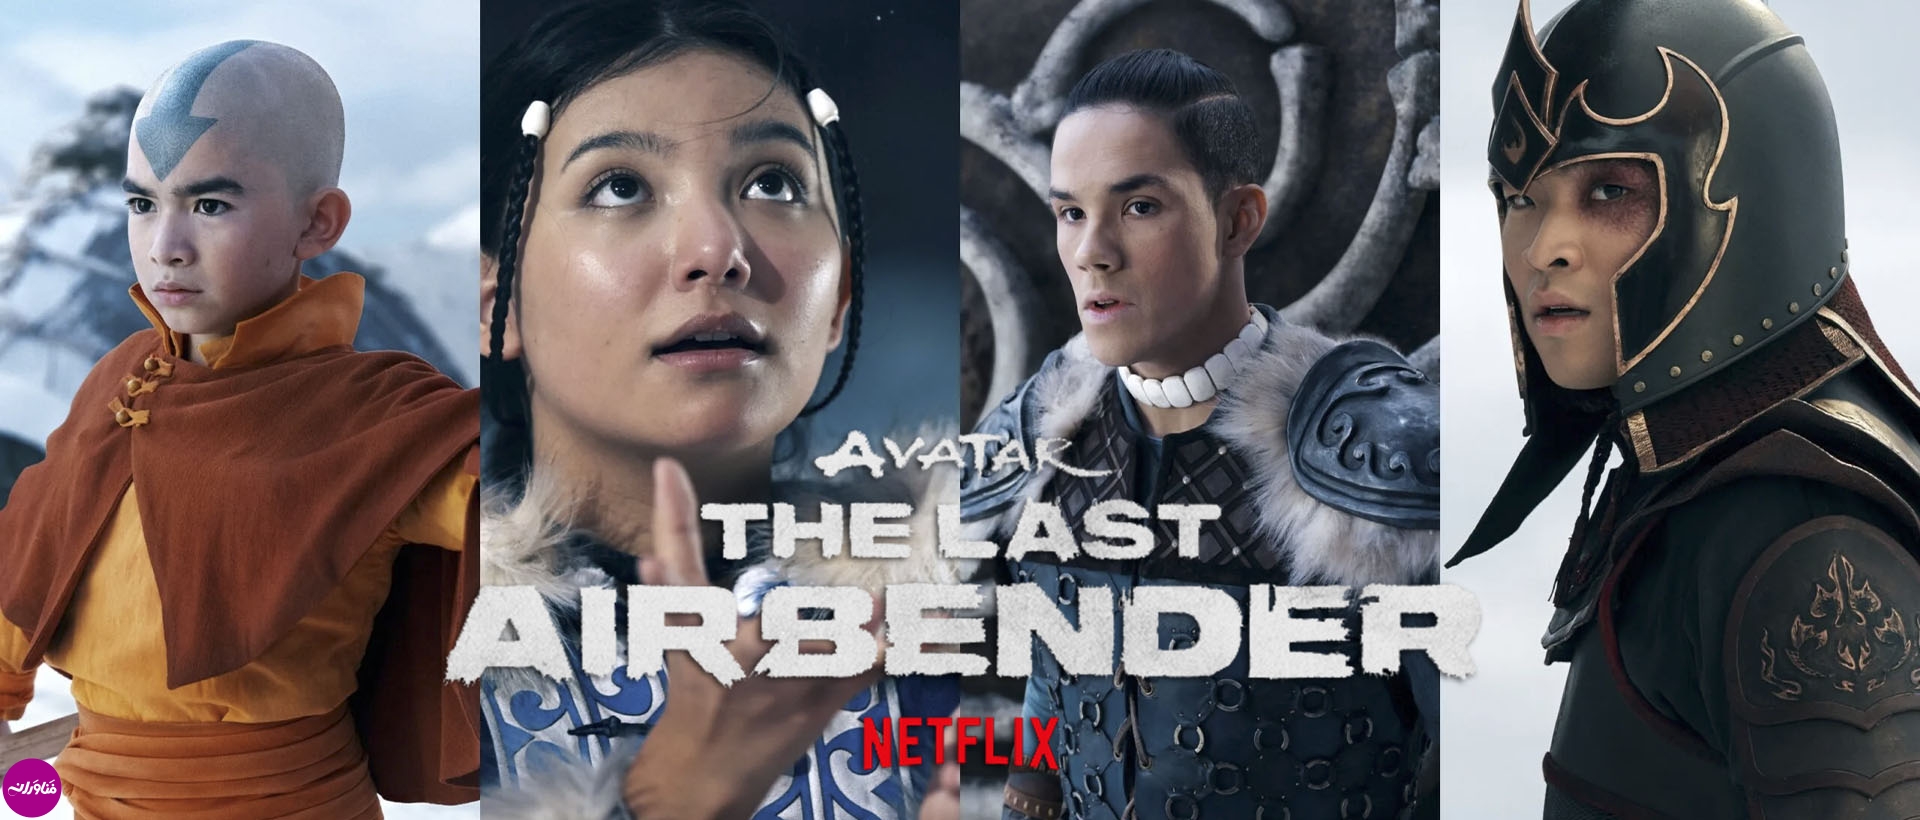 تاریخ انتشار فصل دوم سریال Avatar: The Last Airbender